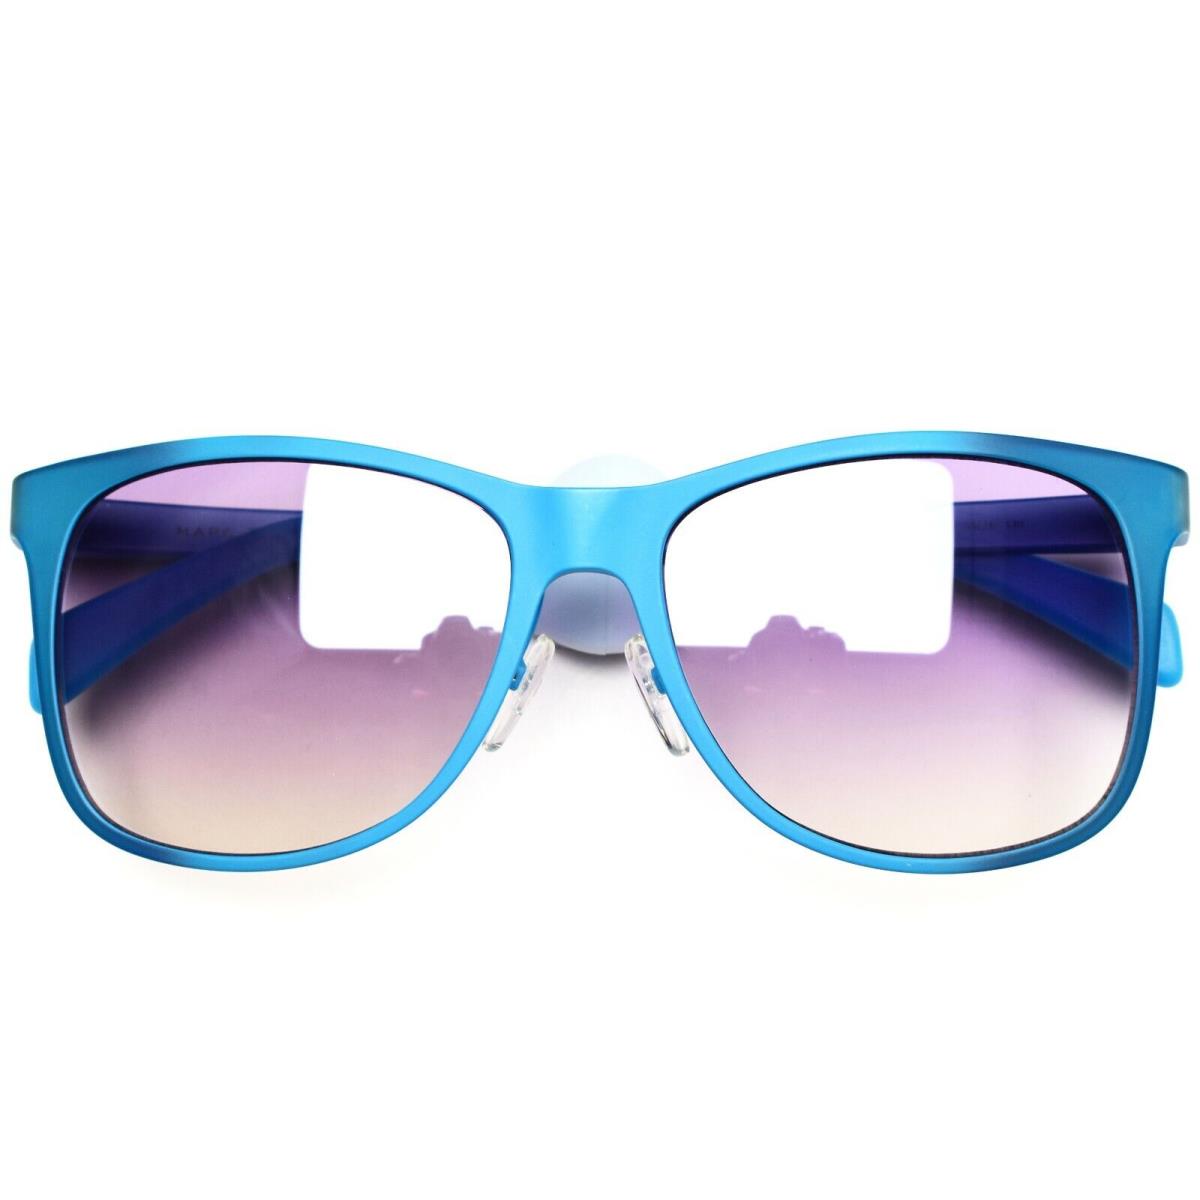 Marc by Marc Jacobs 452S Acs F7 Sunglasses 55-16-140 - Frame: Blue